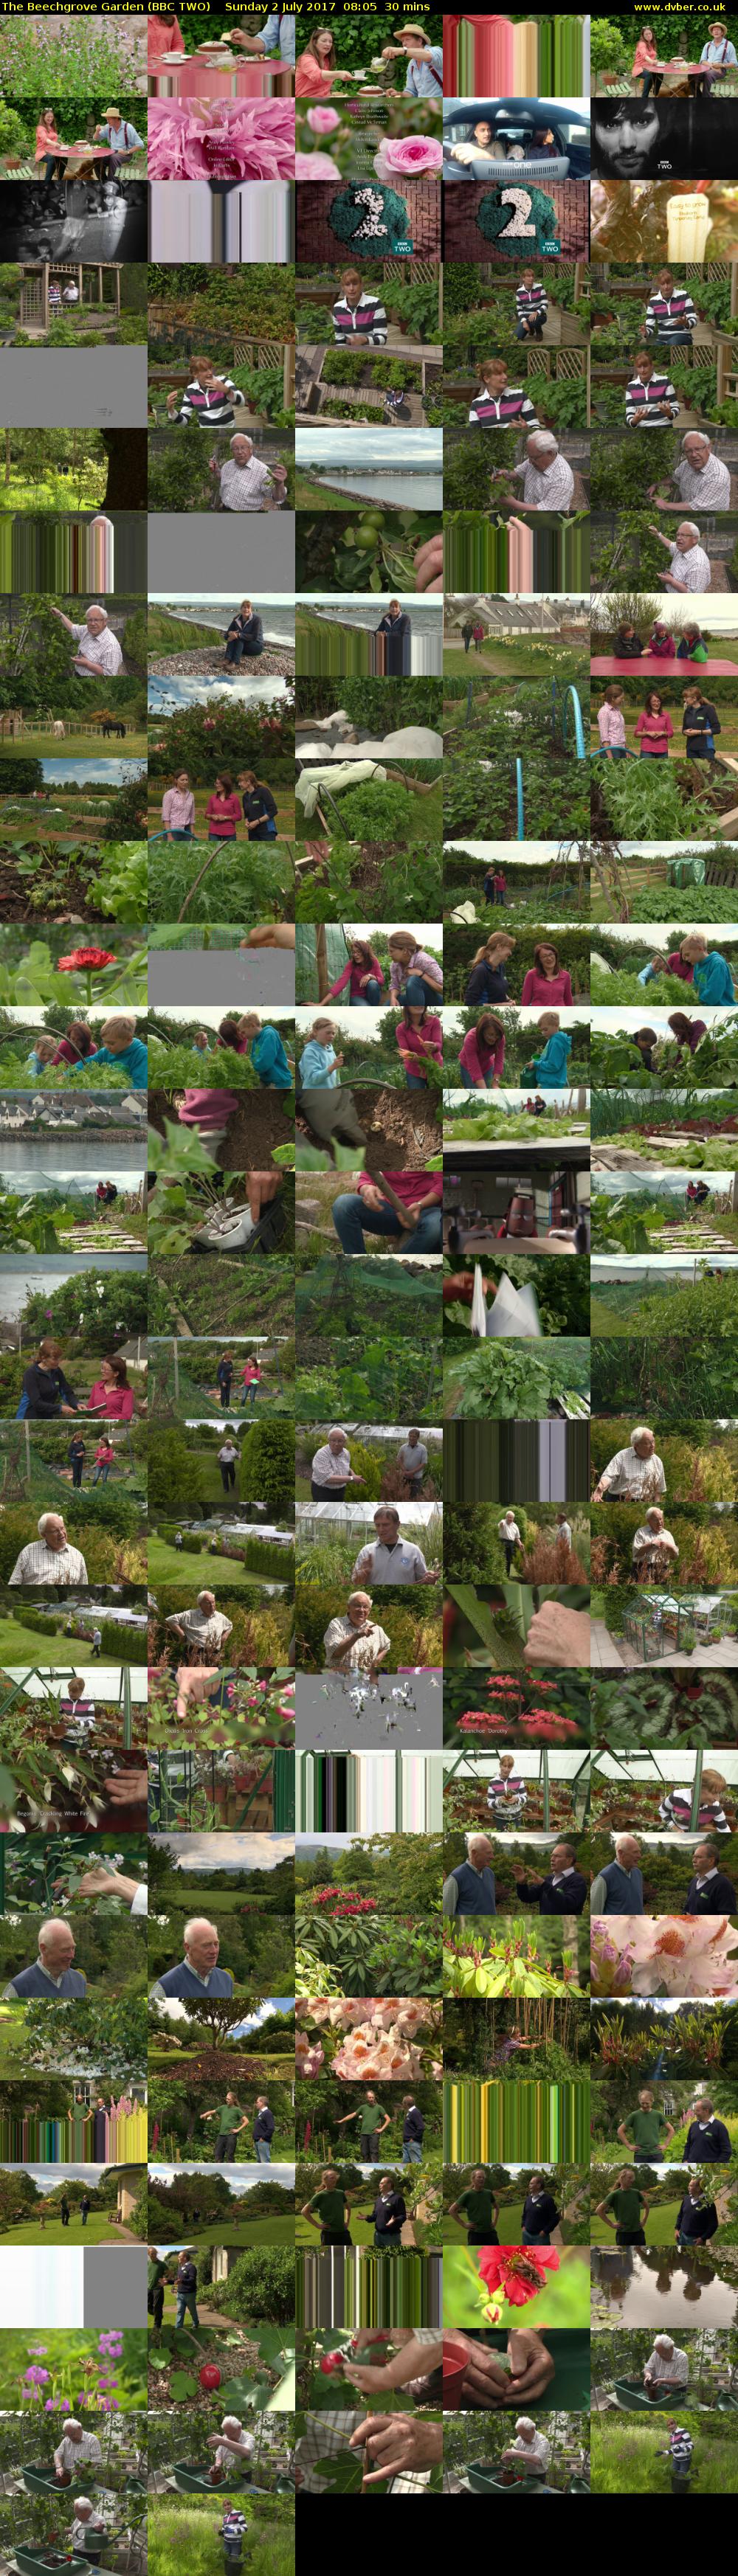 The Beechgrove Garden (BBC TWO) Sunday 2 July 2017 08:05 - 08:35